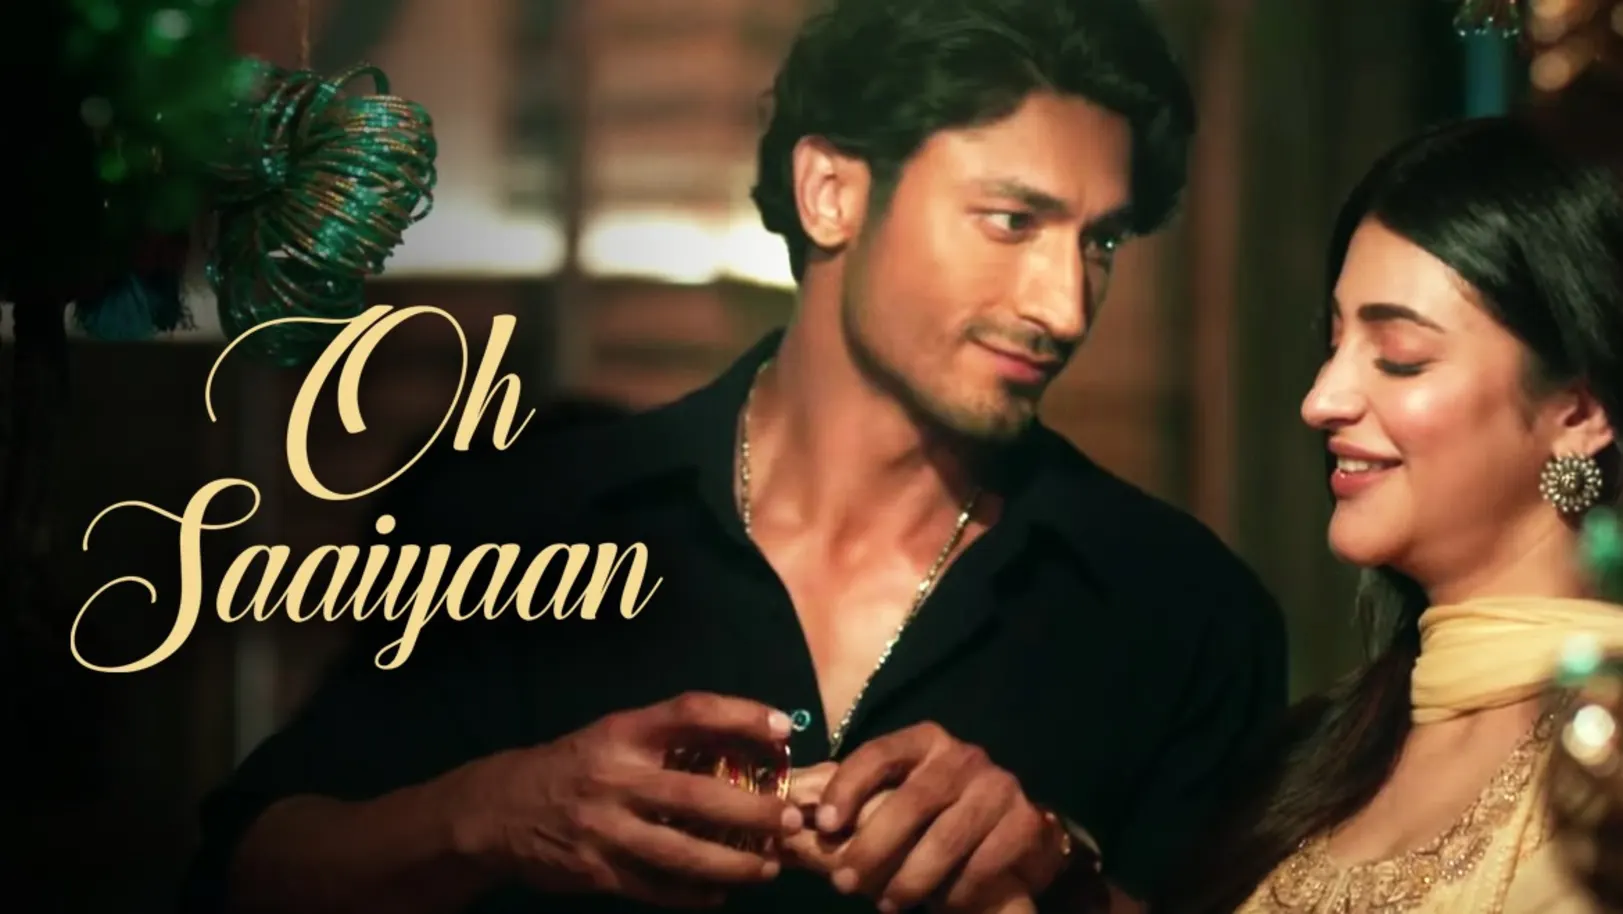 Oh Saaiyaan - The Power | Arijit Singh | Raj Pandit | Vidyut Jammwal | Shruti Haasan 